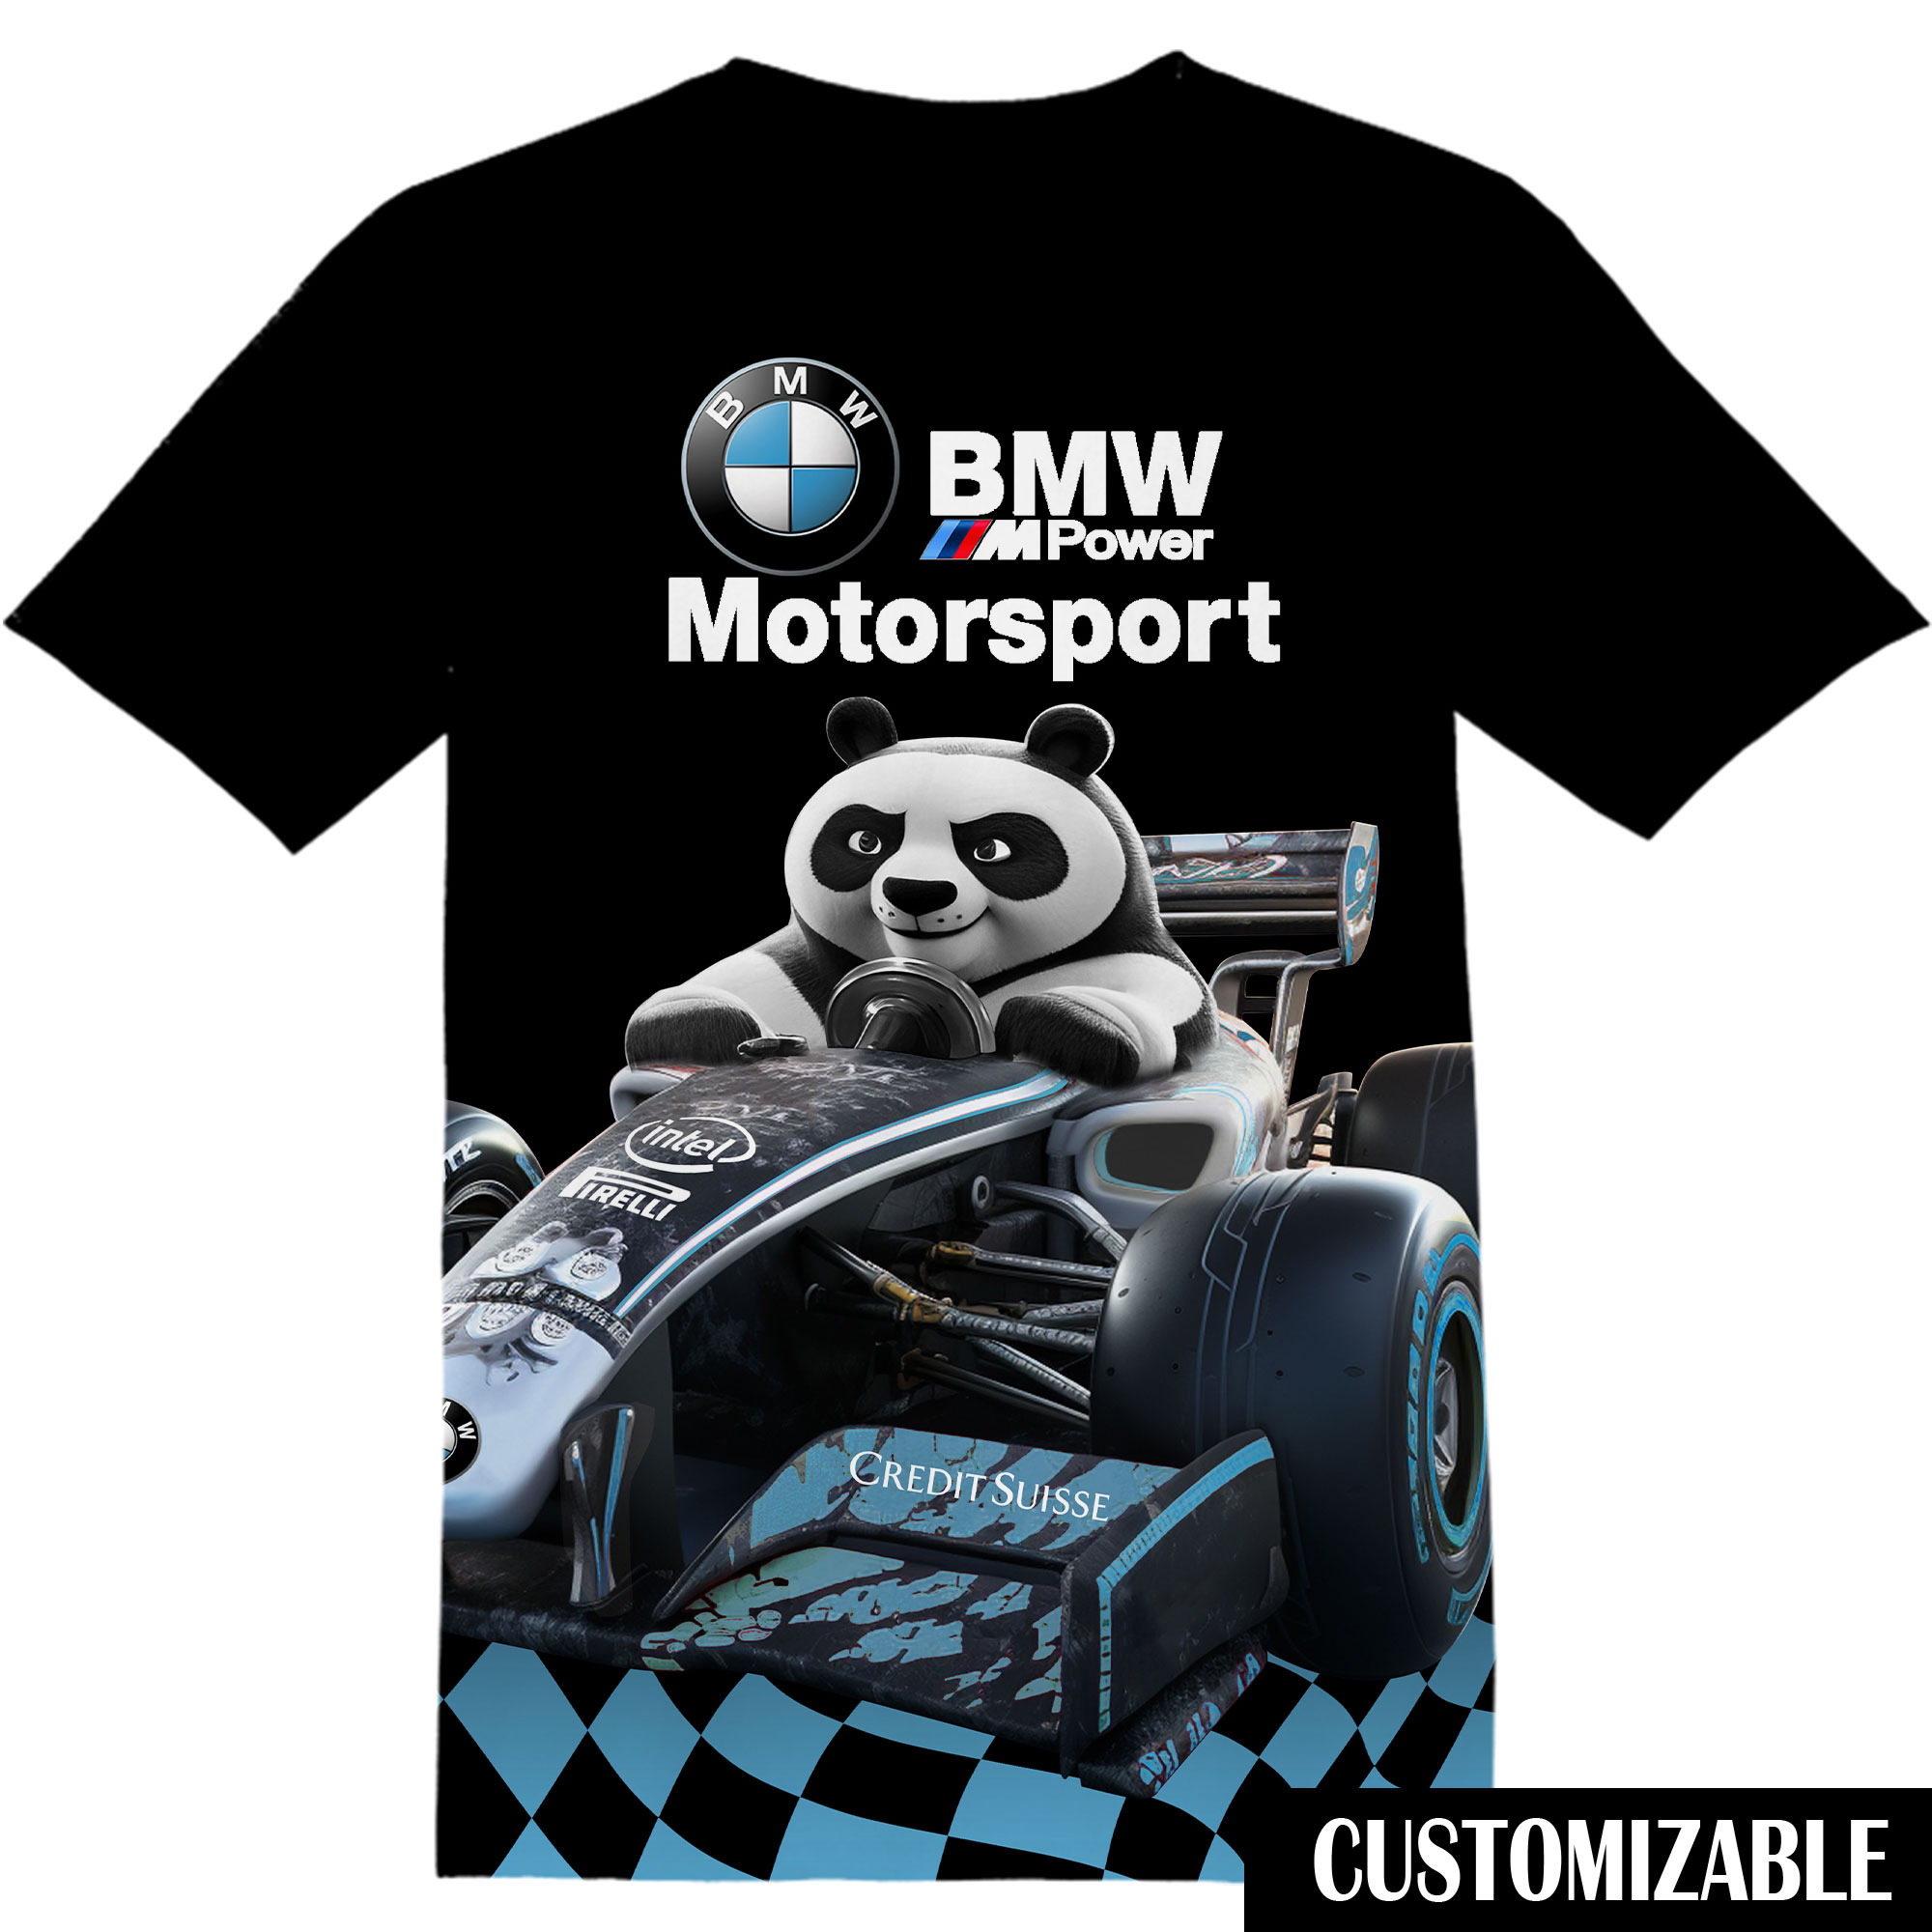 Customized BMW M Motorsport F1 Team Kung Fu Panda Shirt QDH